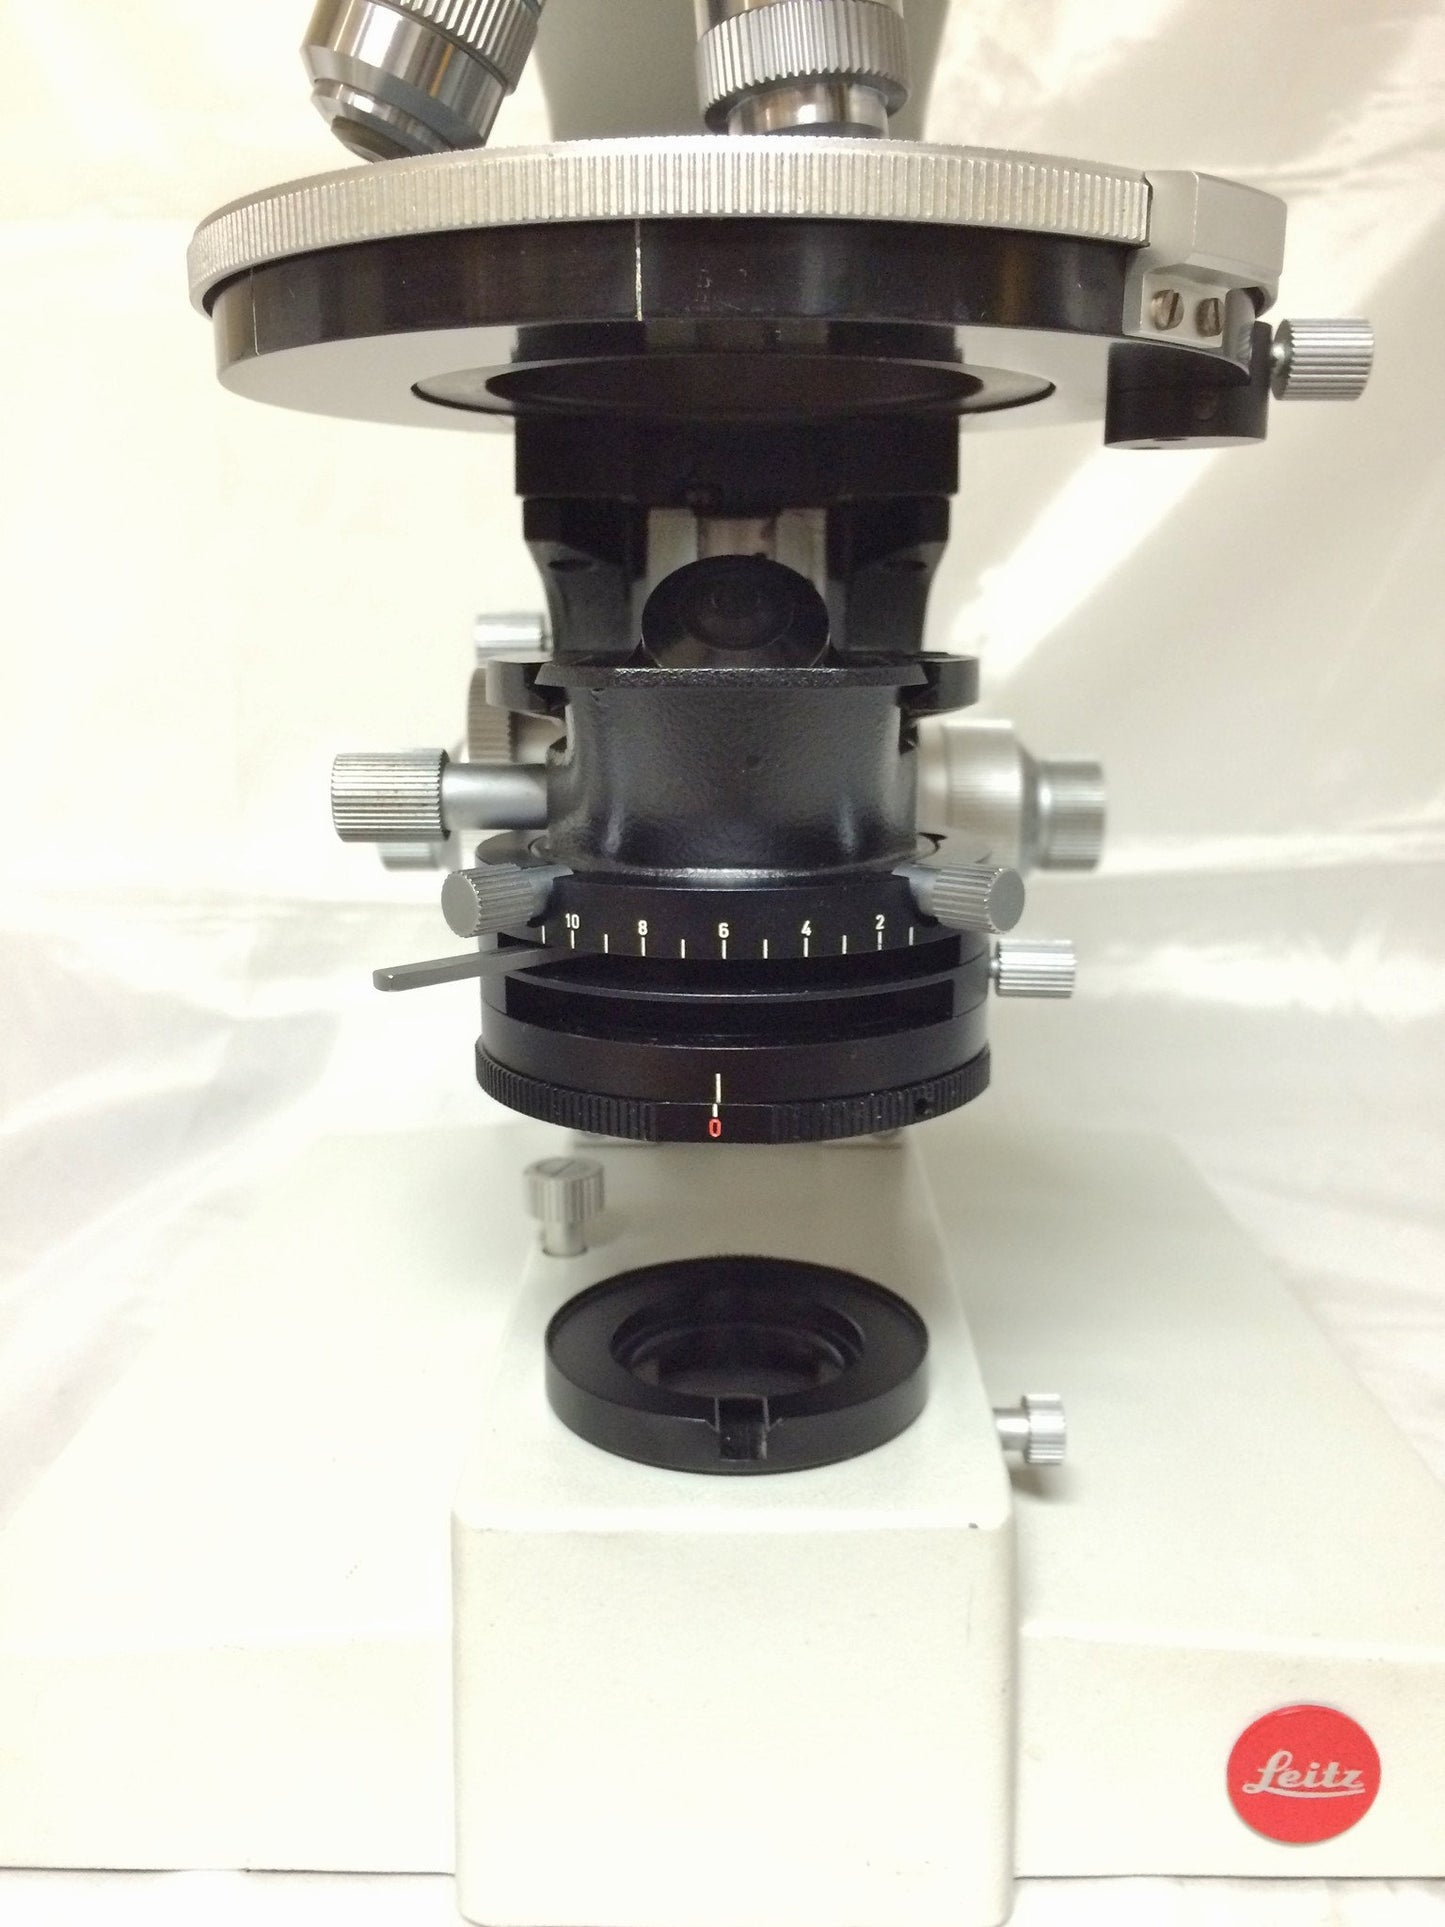 Leitz SM-LUX-POL Polarizing Microscope Refurbished - Microscope Central
 - 4